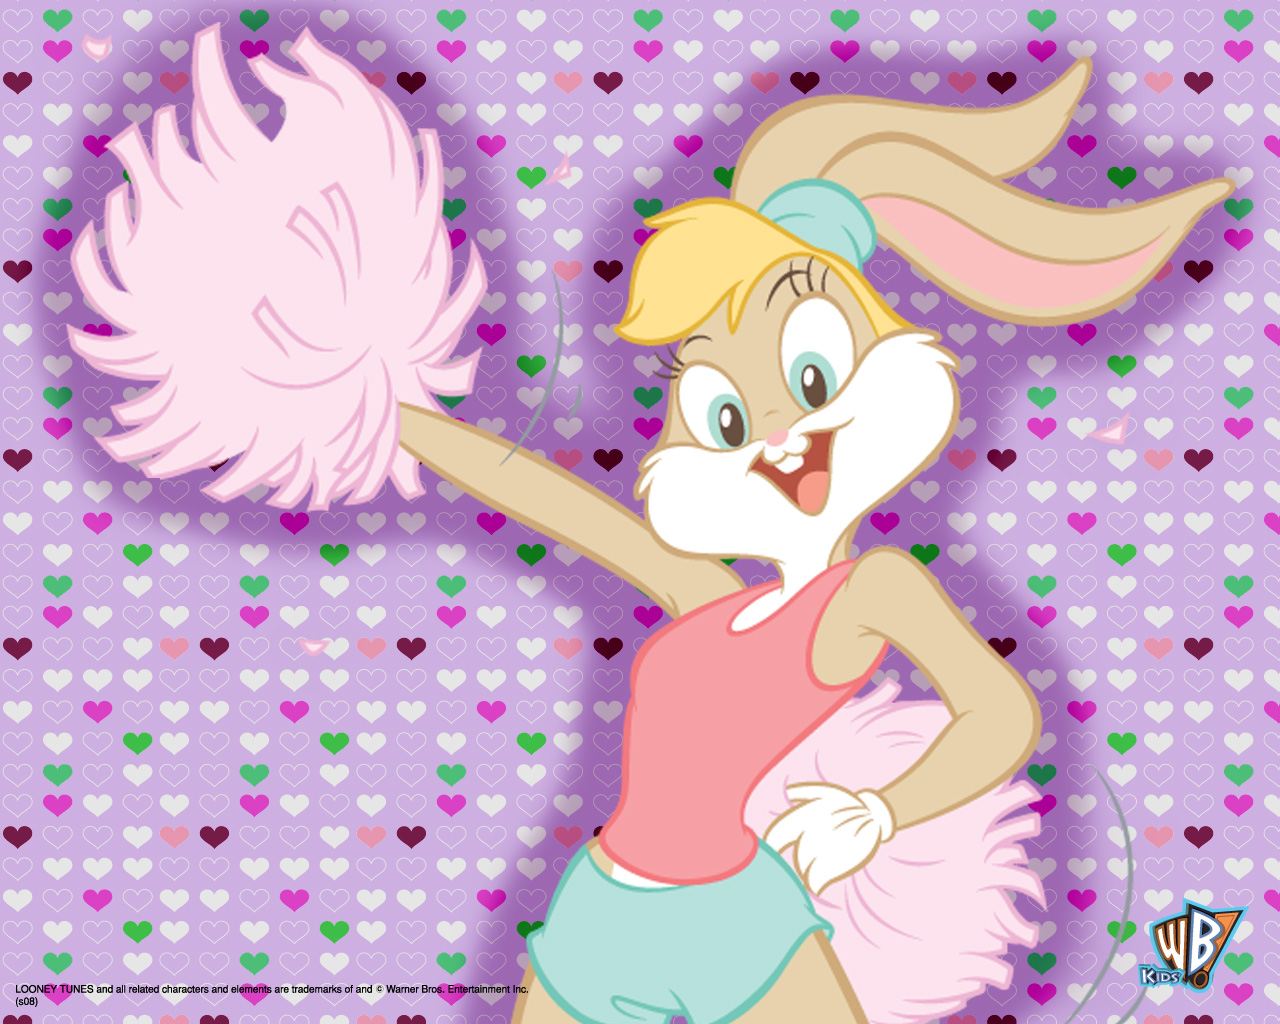 Lola Bunny Image. My Fiesta! in english